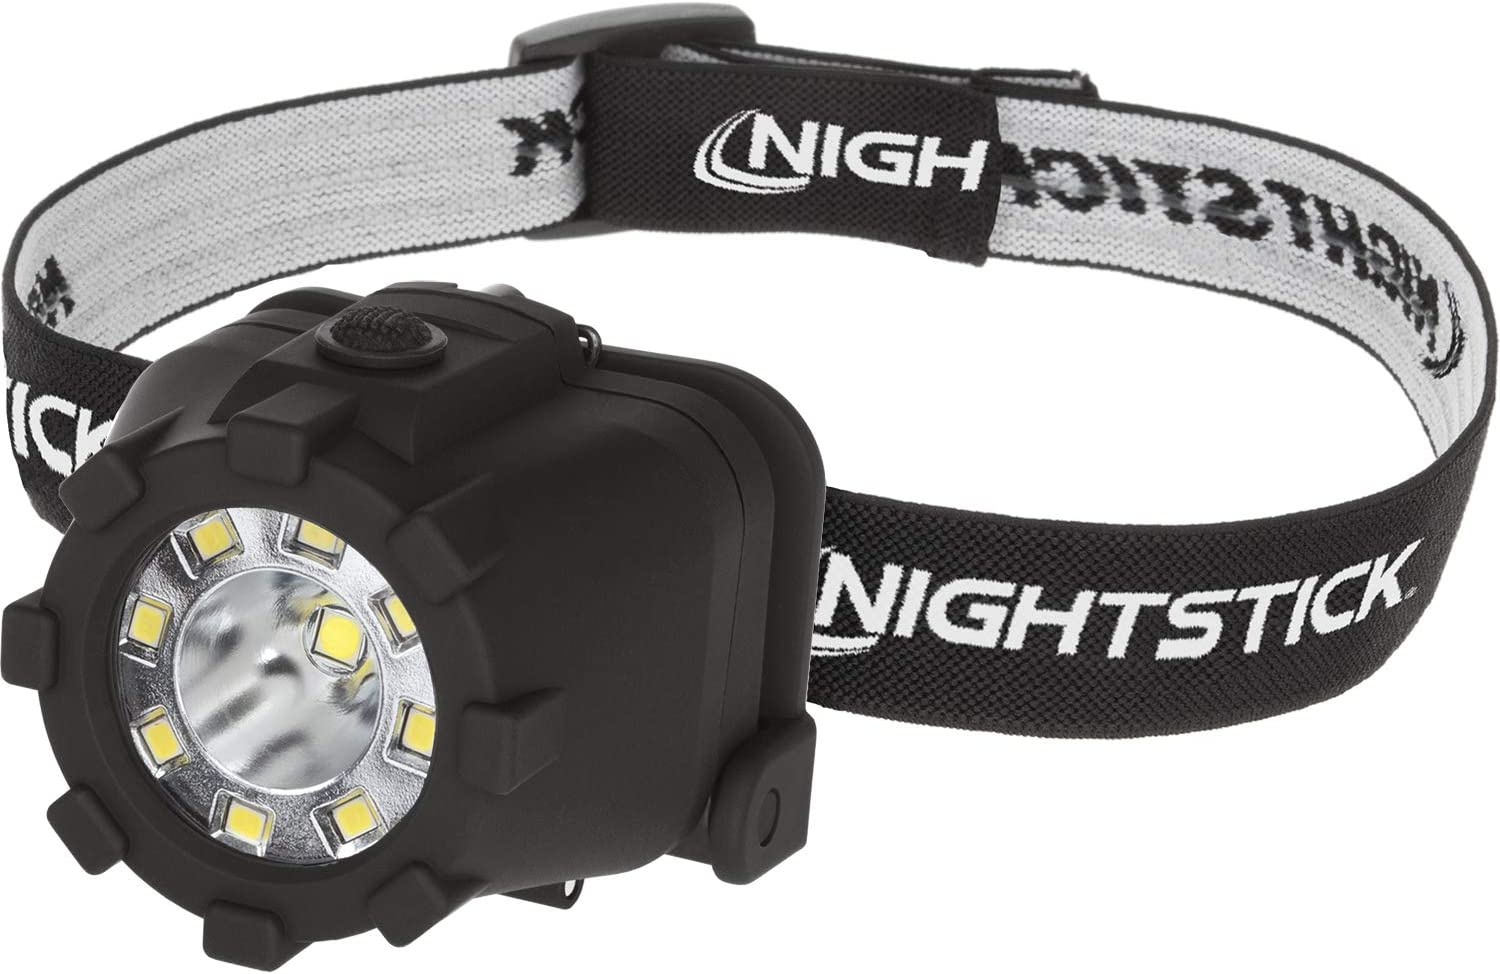 Nightstick Multi-Function Headlamp